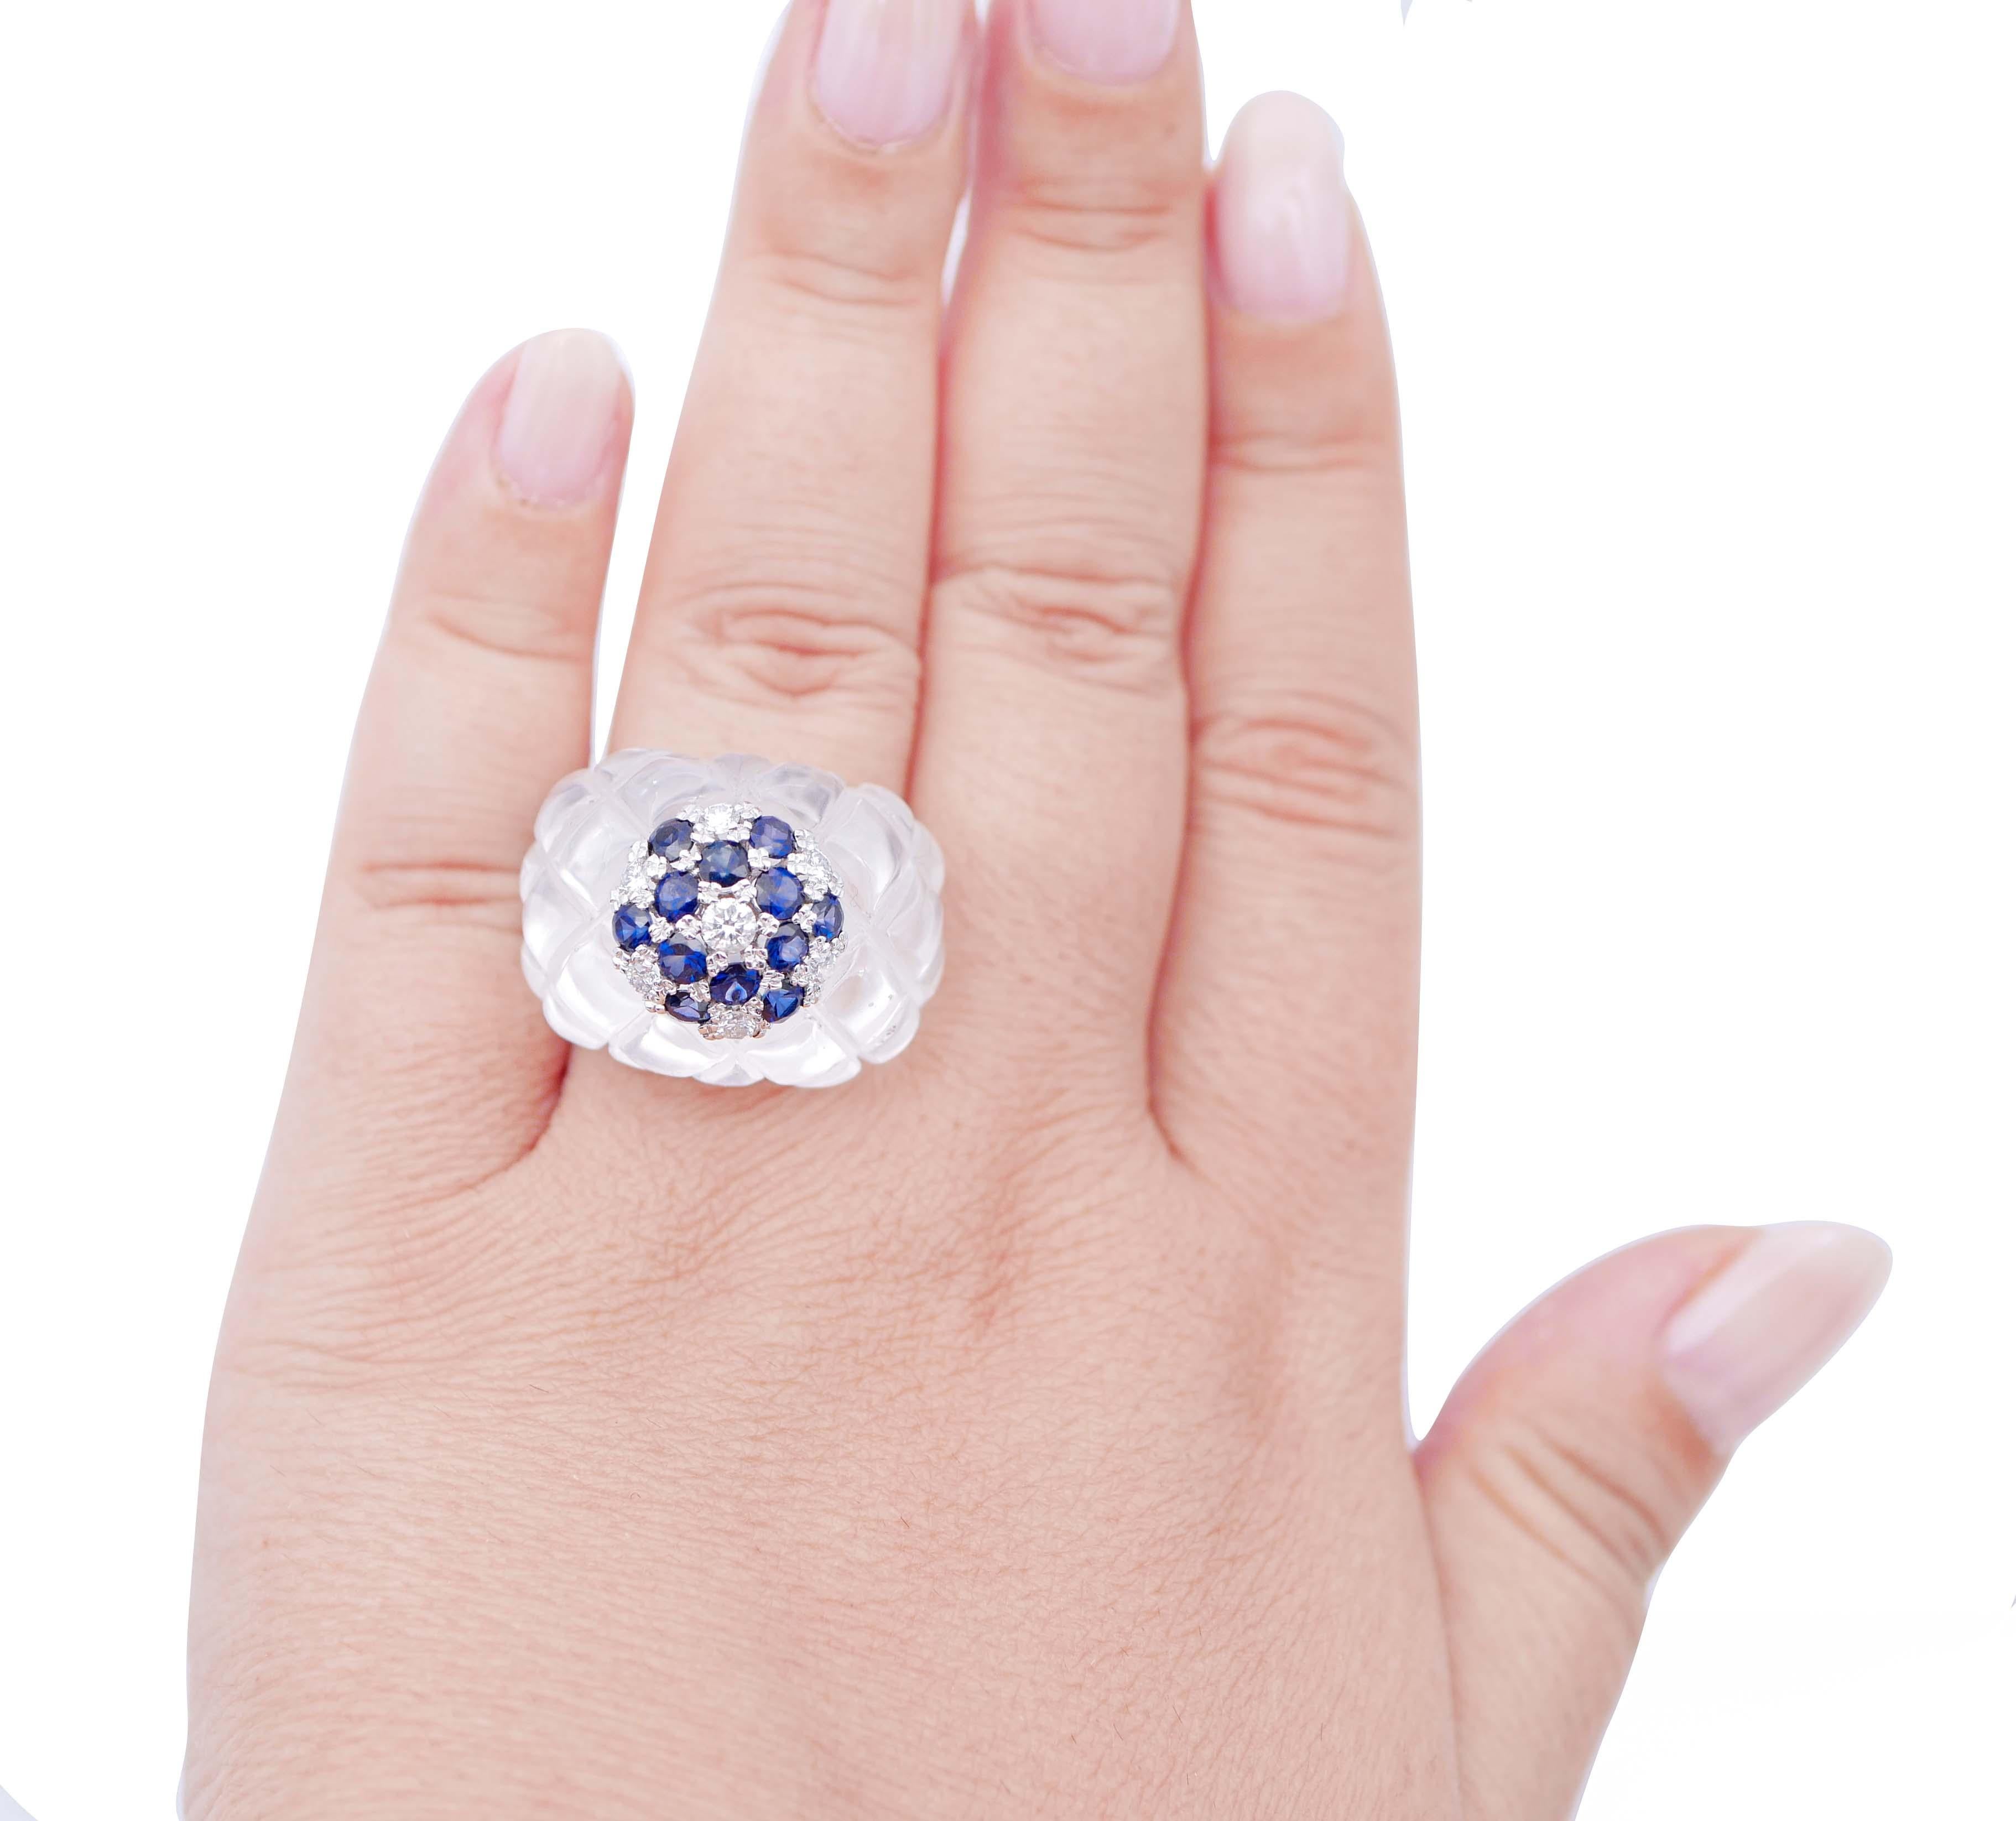 Mixed Cut Rock Crystal, Sapphires, Diamonds, 14 Karat White Gold Ring.